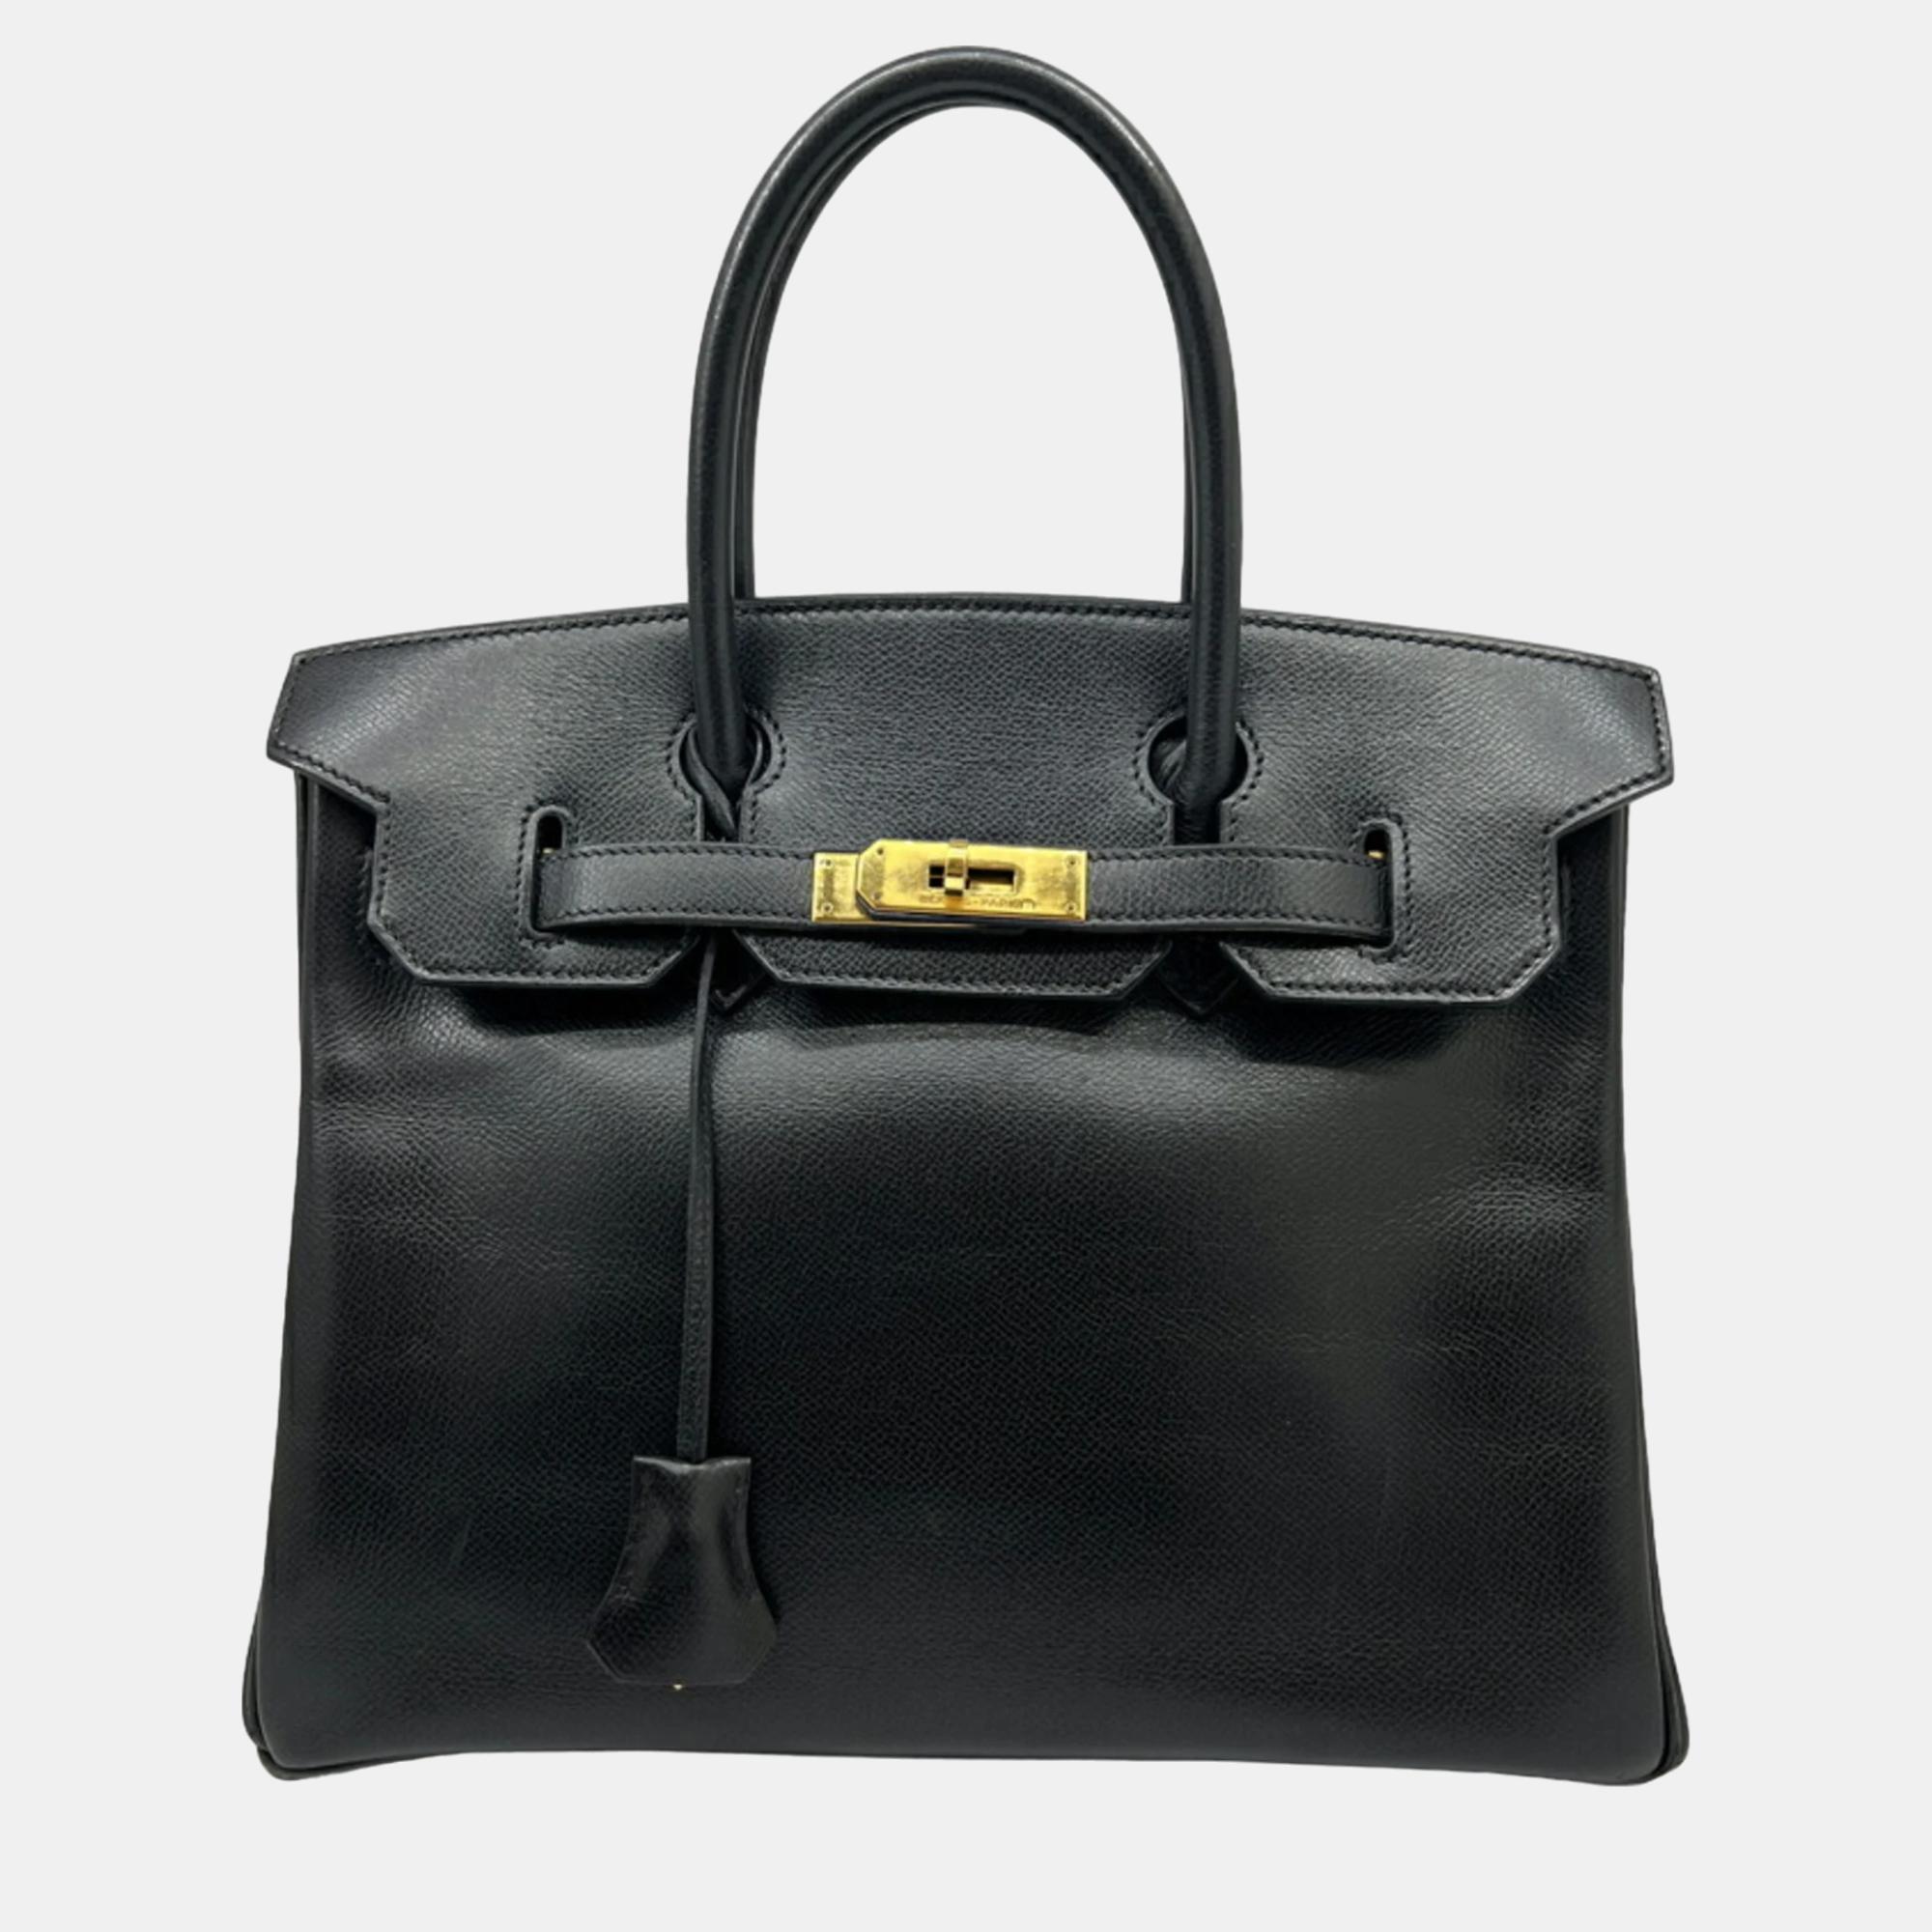 Hermes black lycee birkin engraved handbag